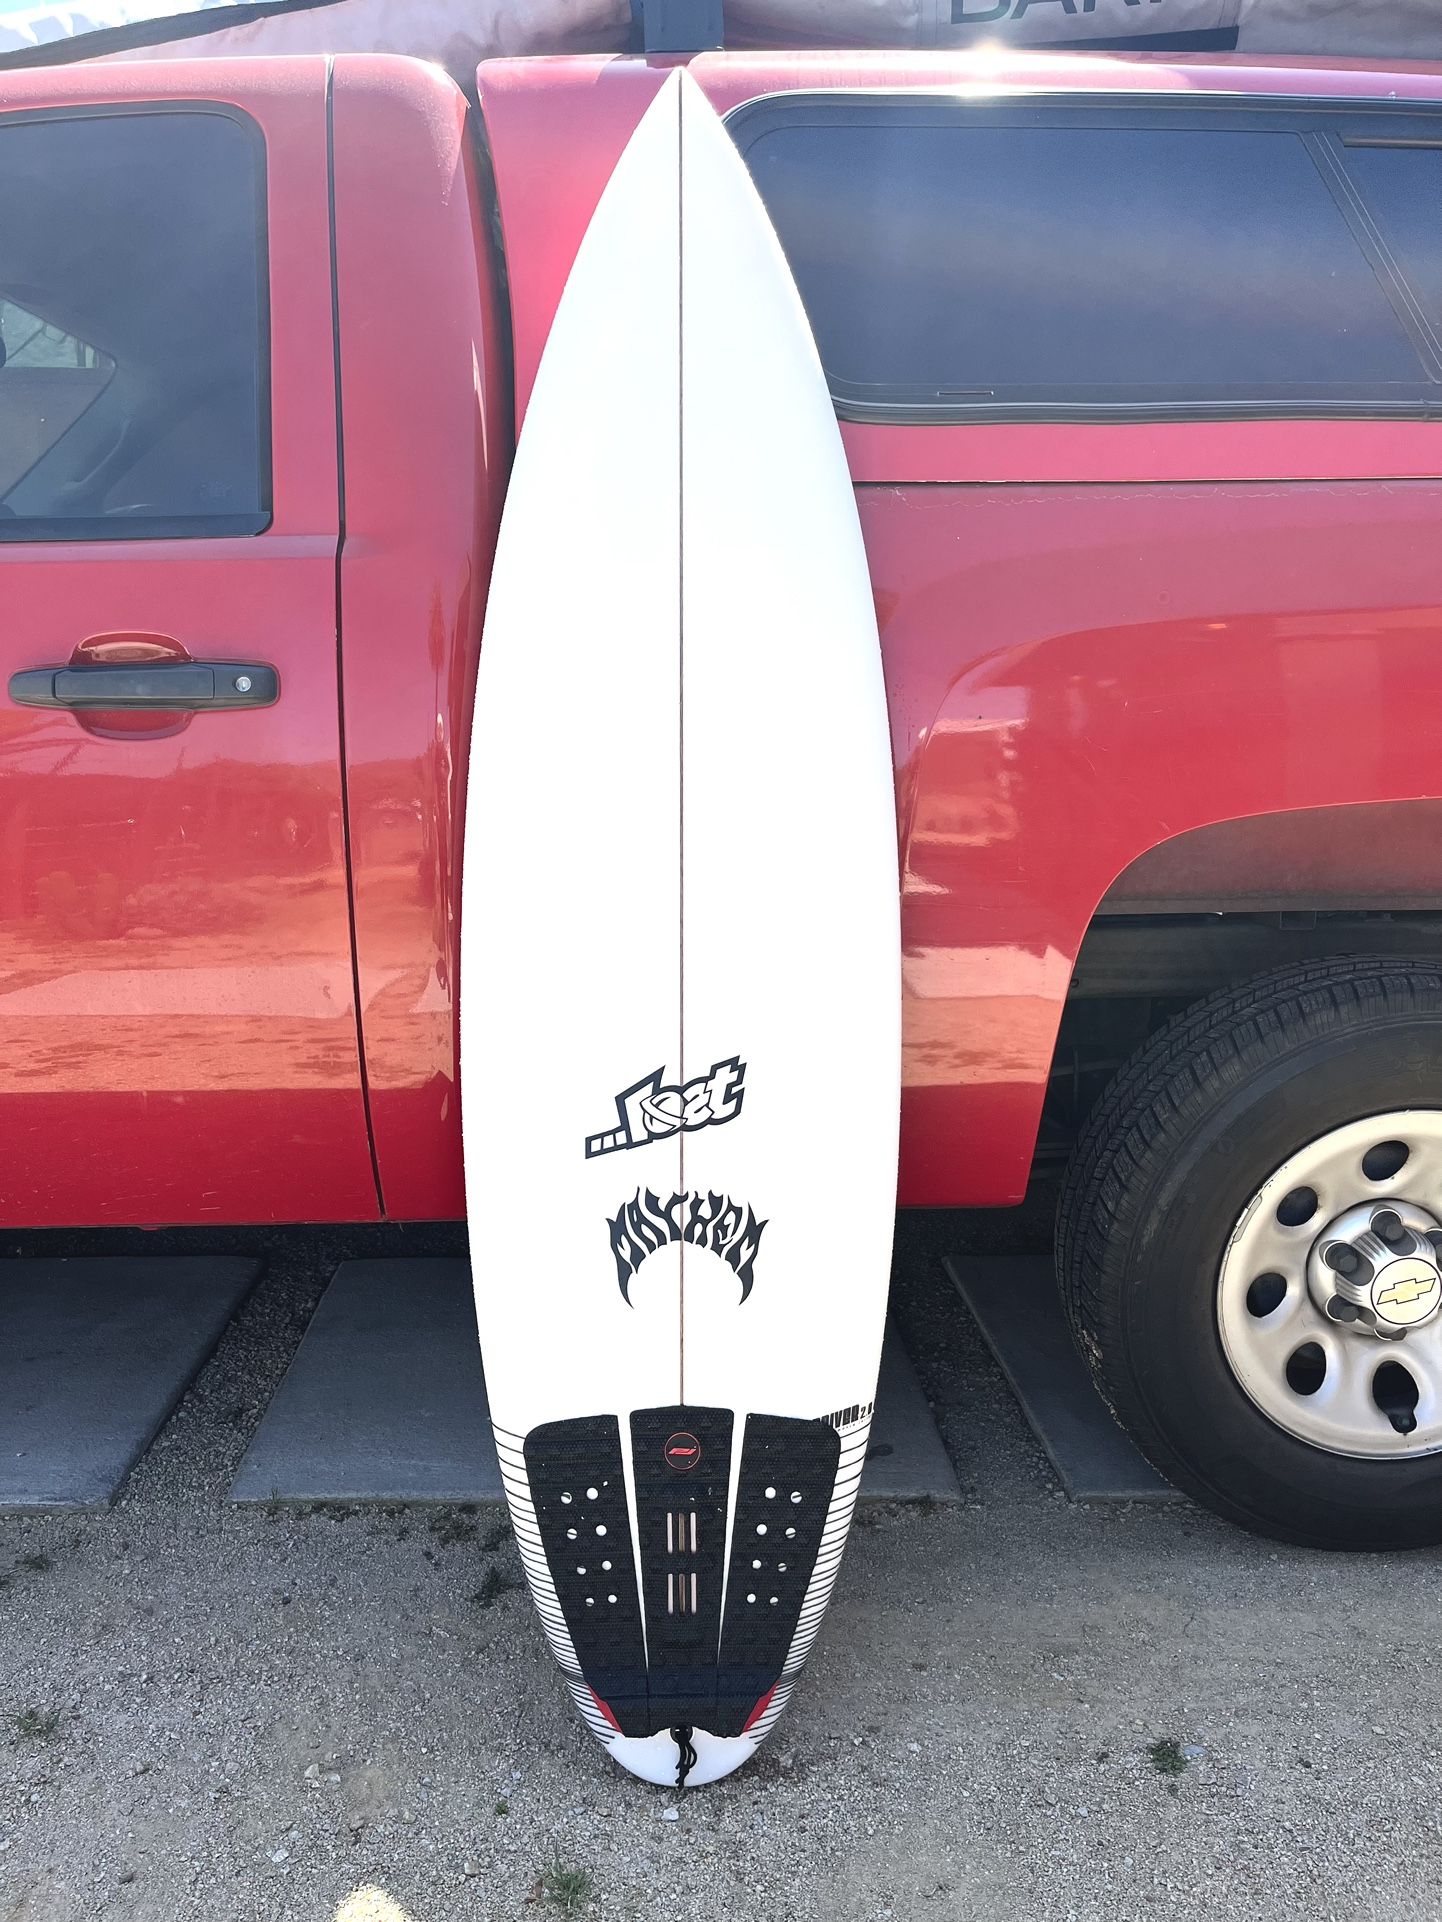 New surfboard - Mayhem driver 2.0 - 5’10”